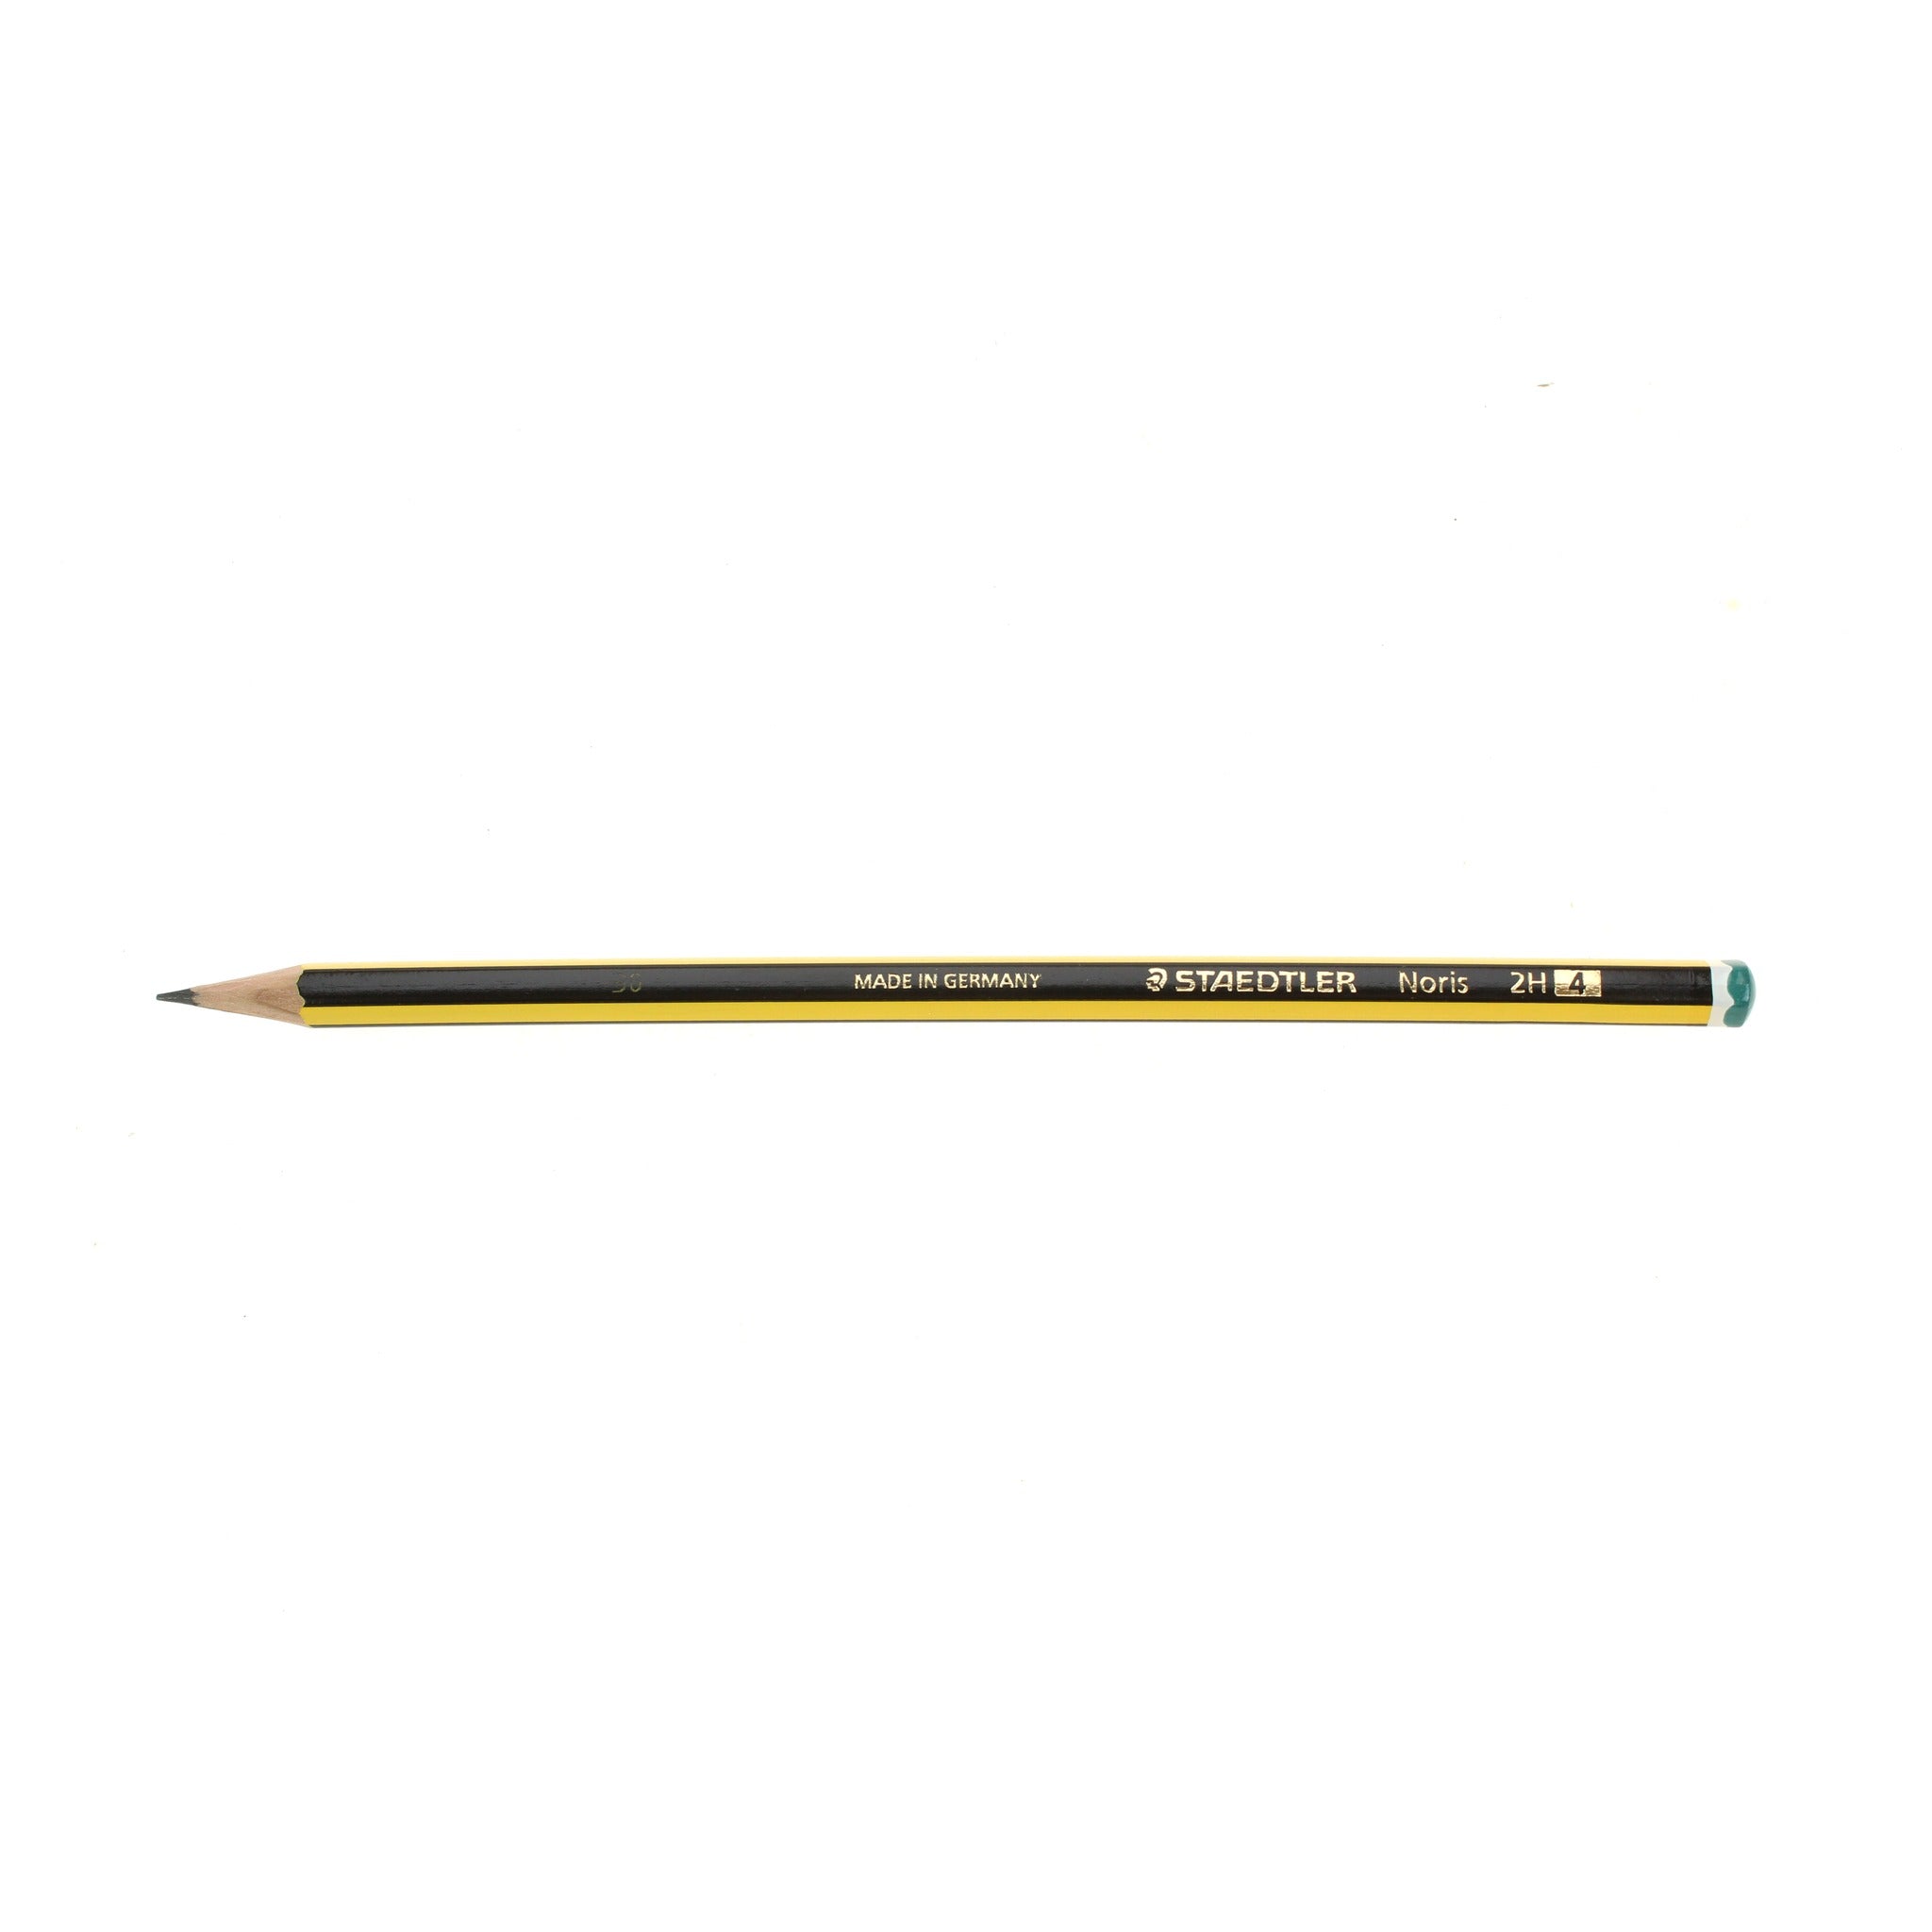 2h lead pencil